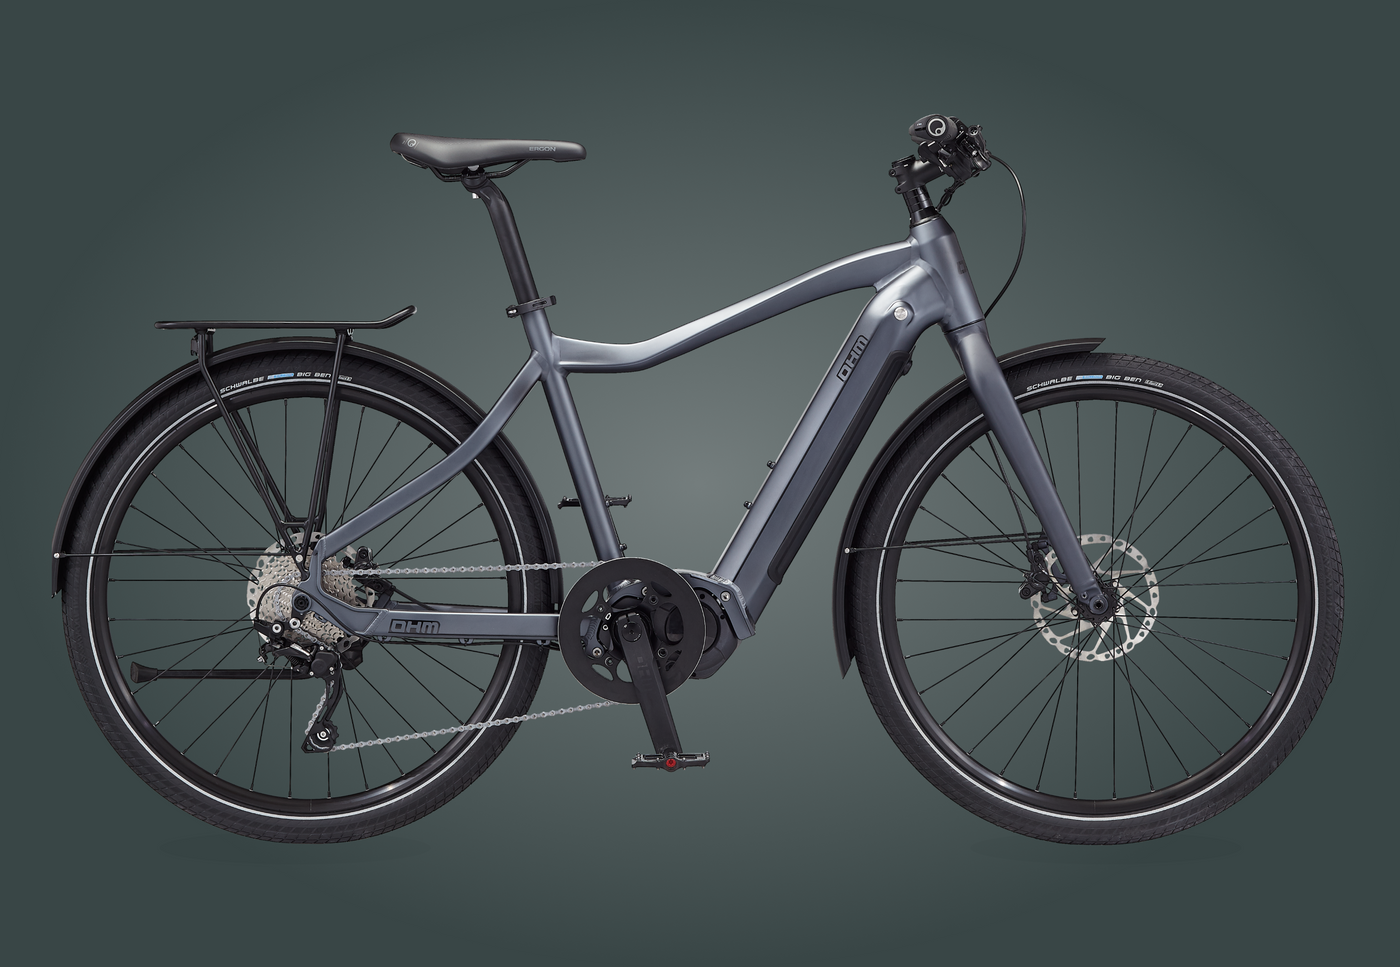 OHM Electric Bikes | Performance Oriented E-bikes Built To Last